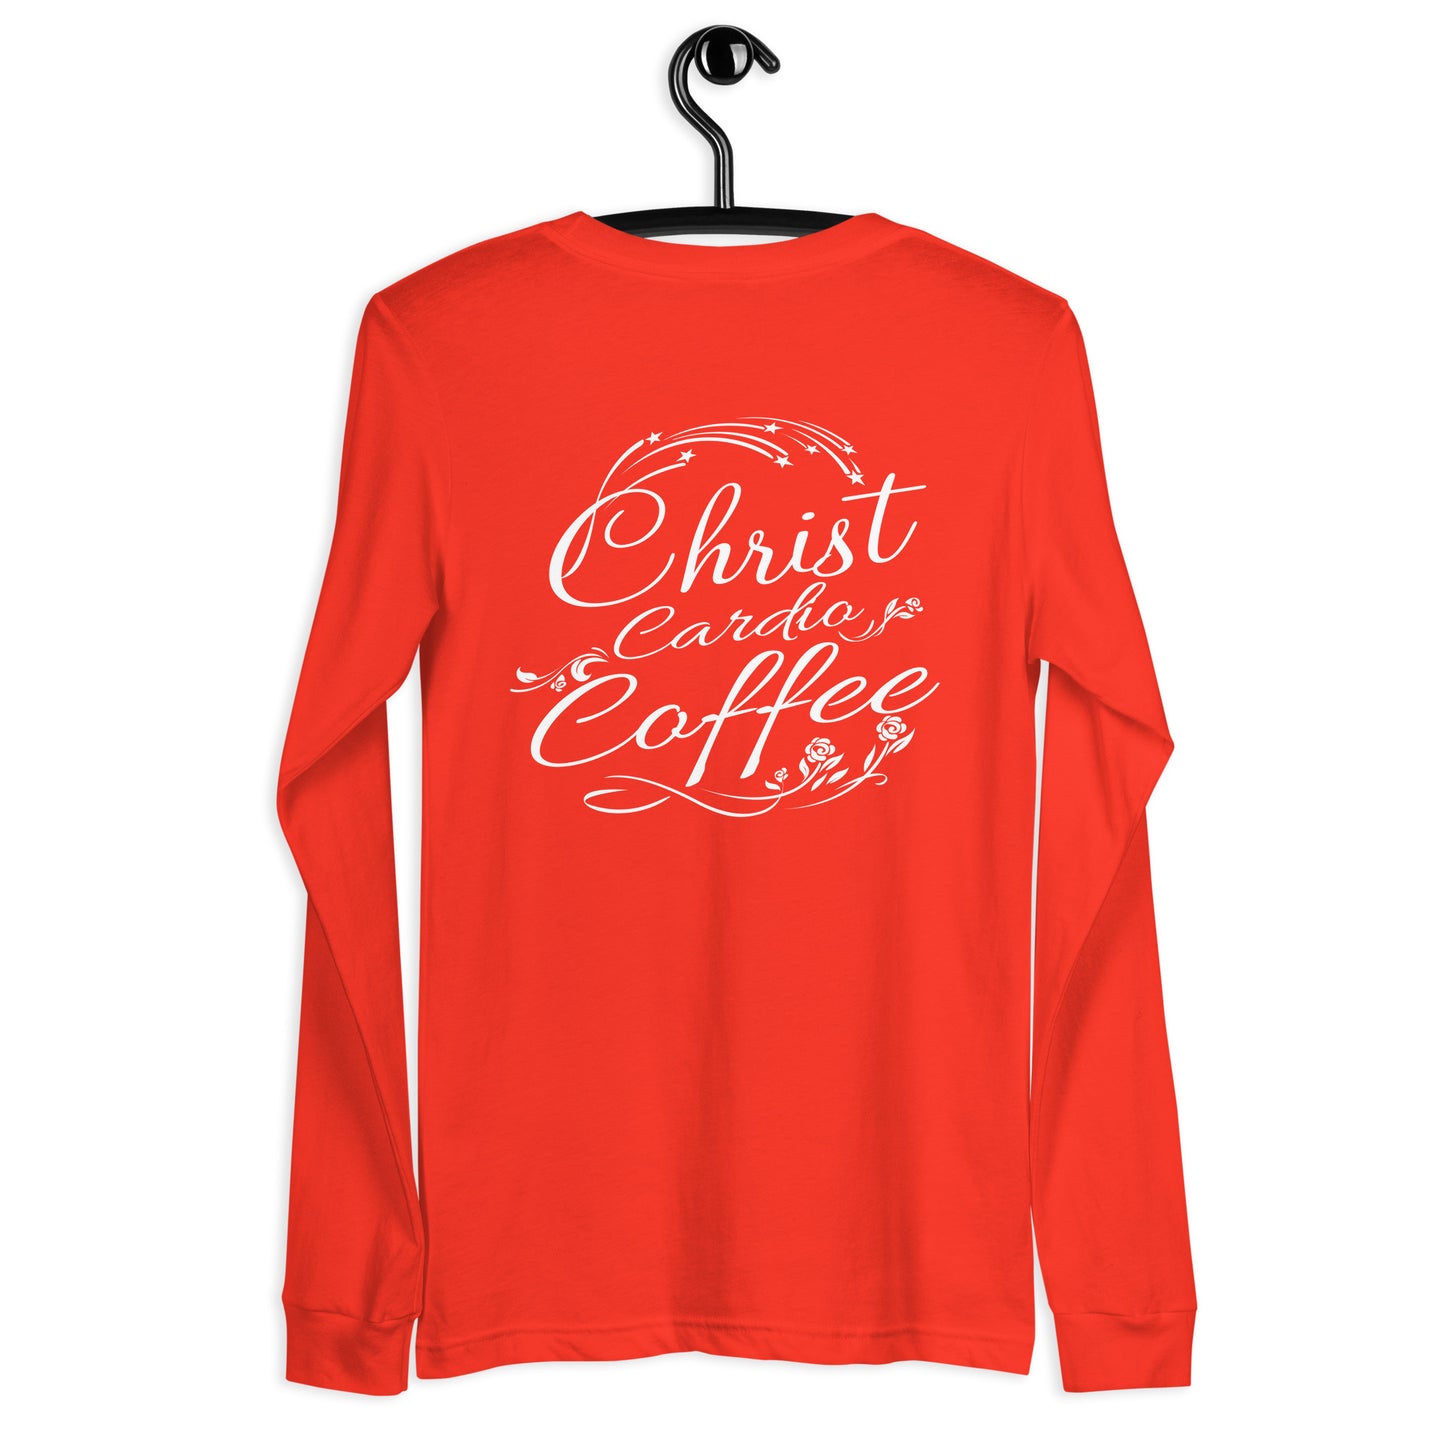 Christ Coffee Cardio - Unisex Long Sleeve Tee - View All Colors